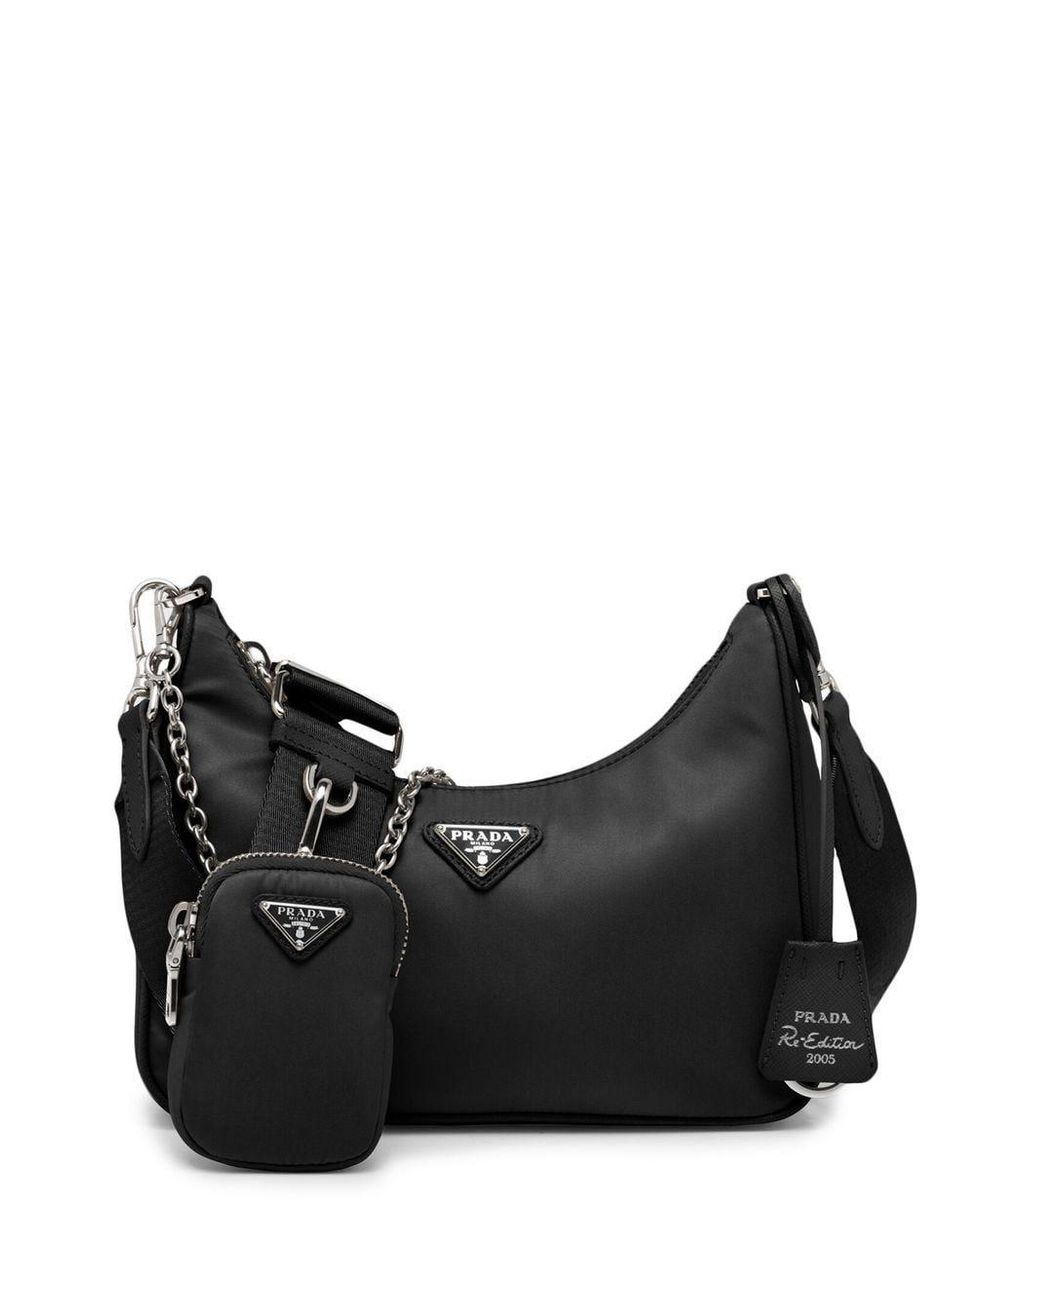 Prada Re-edition 2005 Shoulder Bag in Black | Lyst